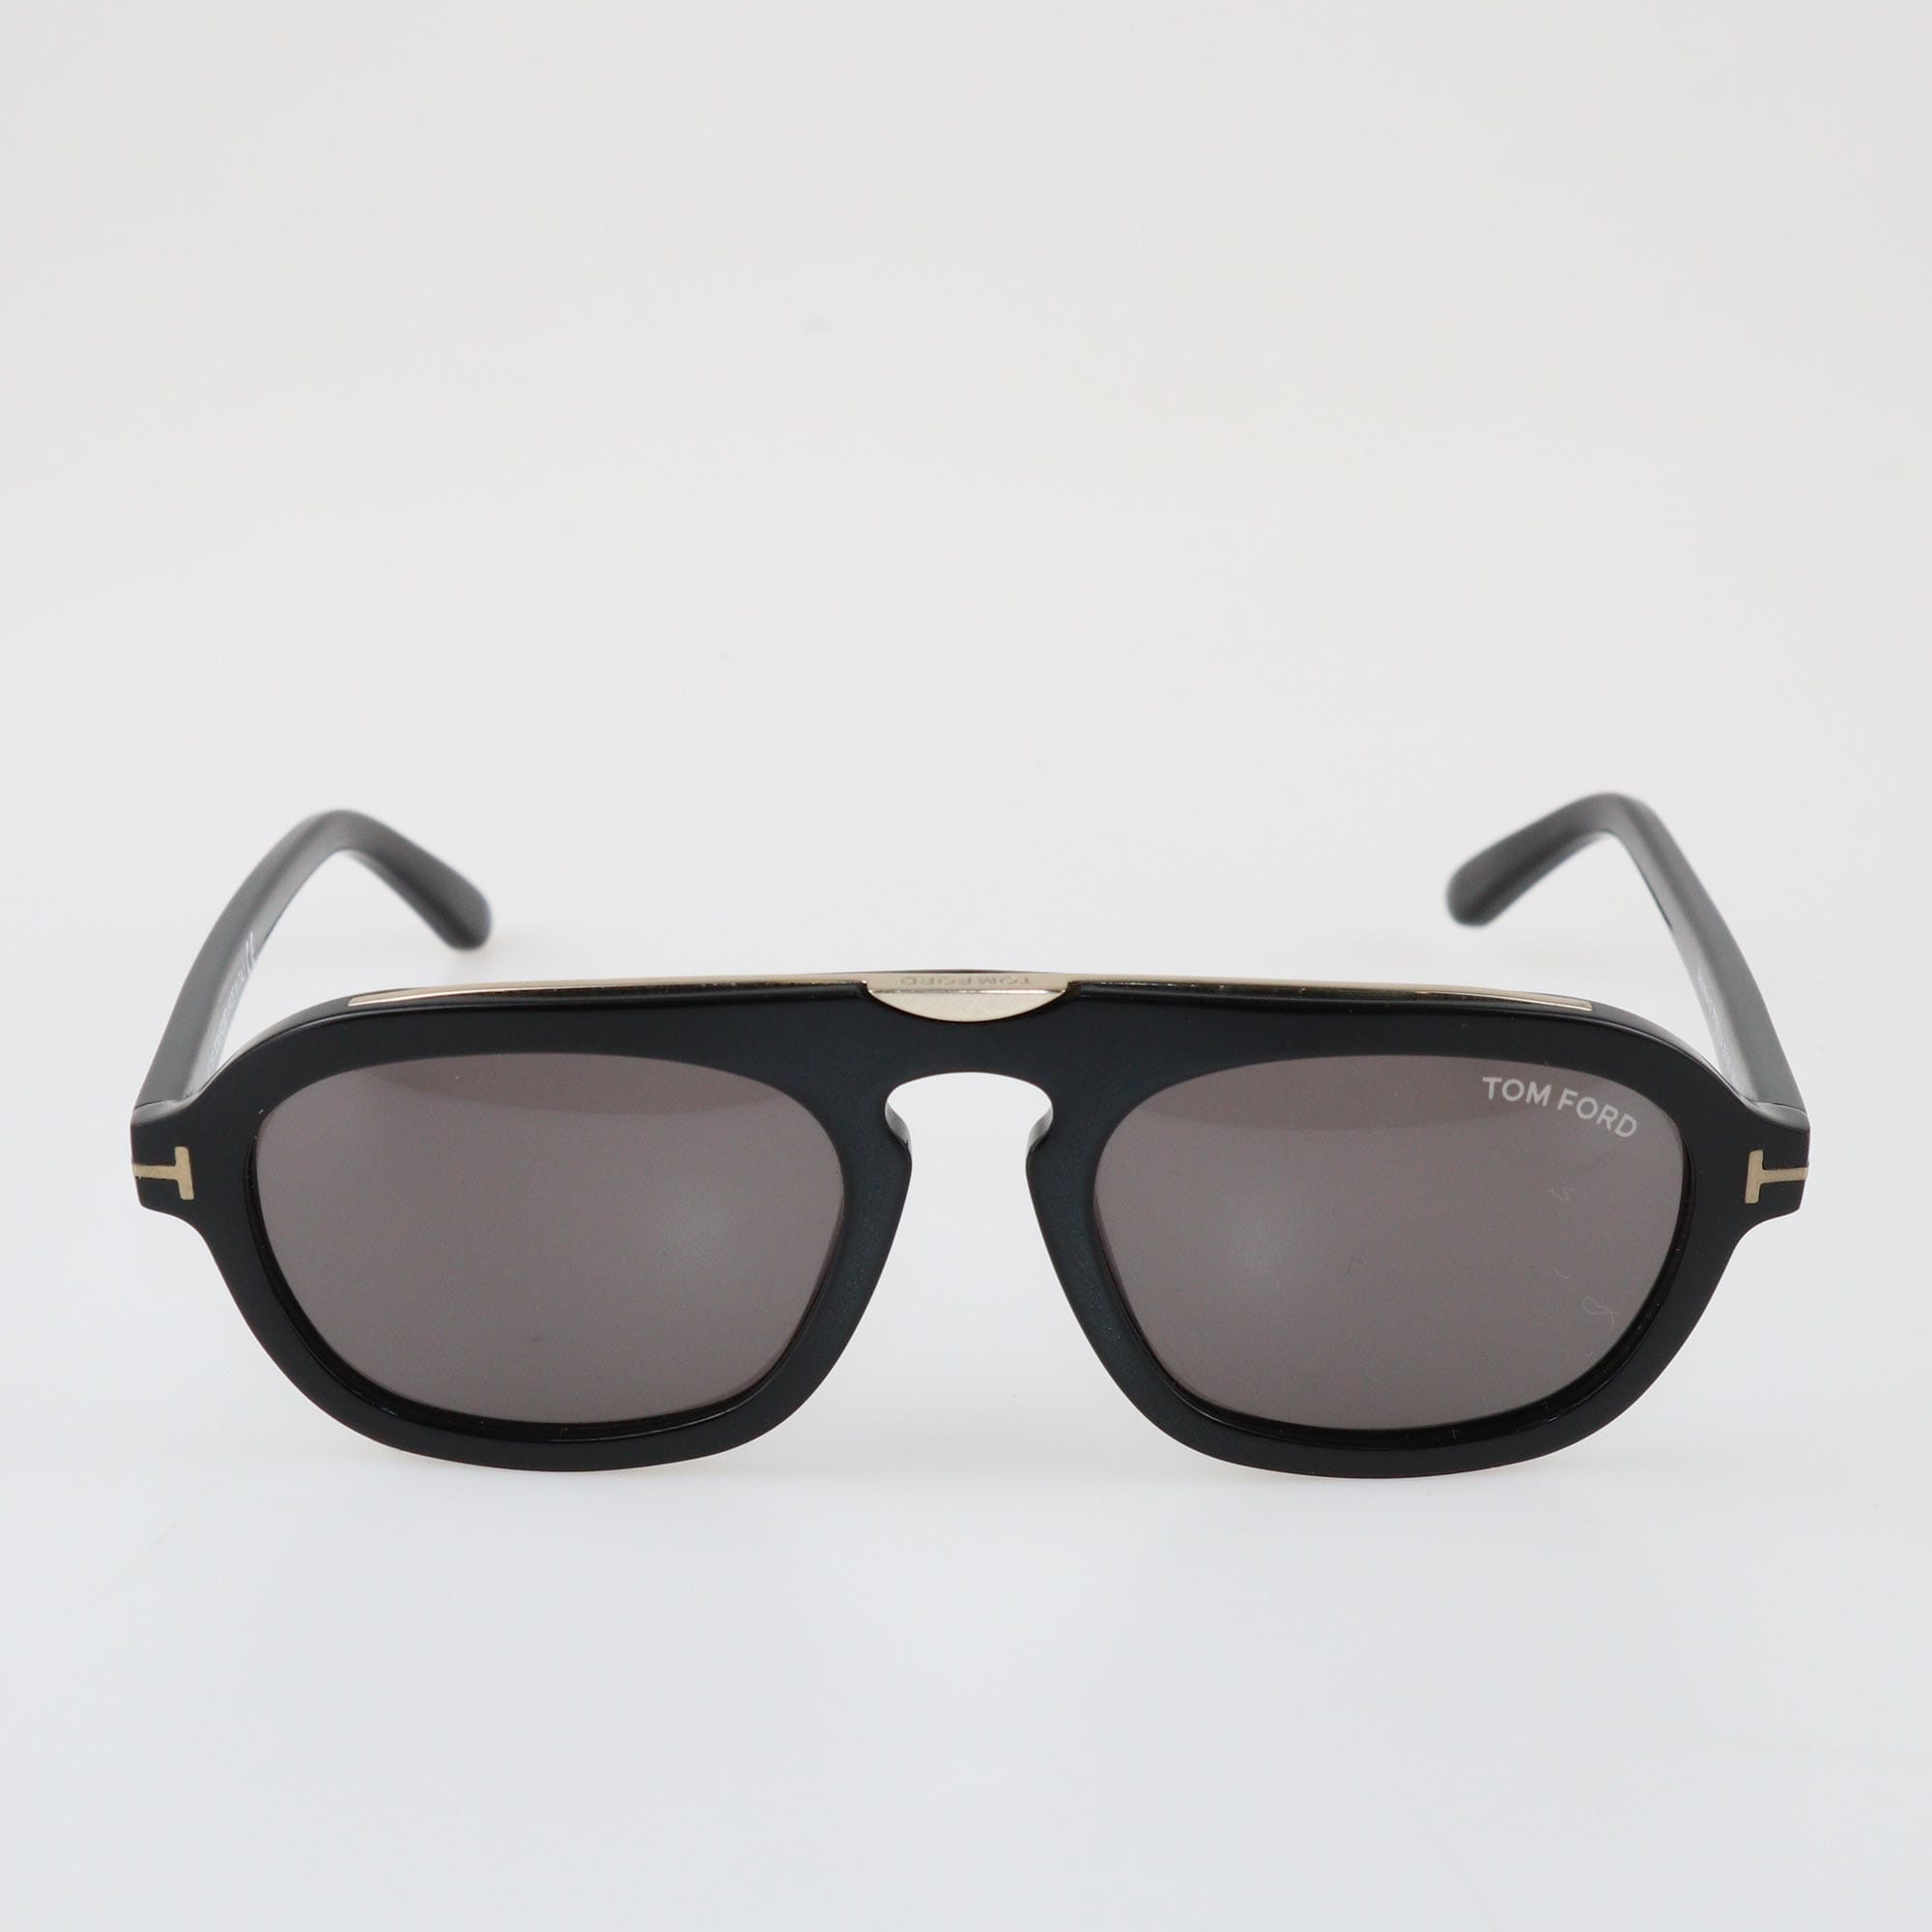 Tom Ford Black TF736 Sunglasses Accessories Tom Ford 